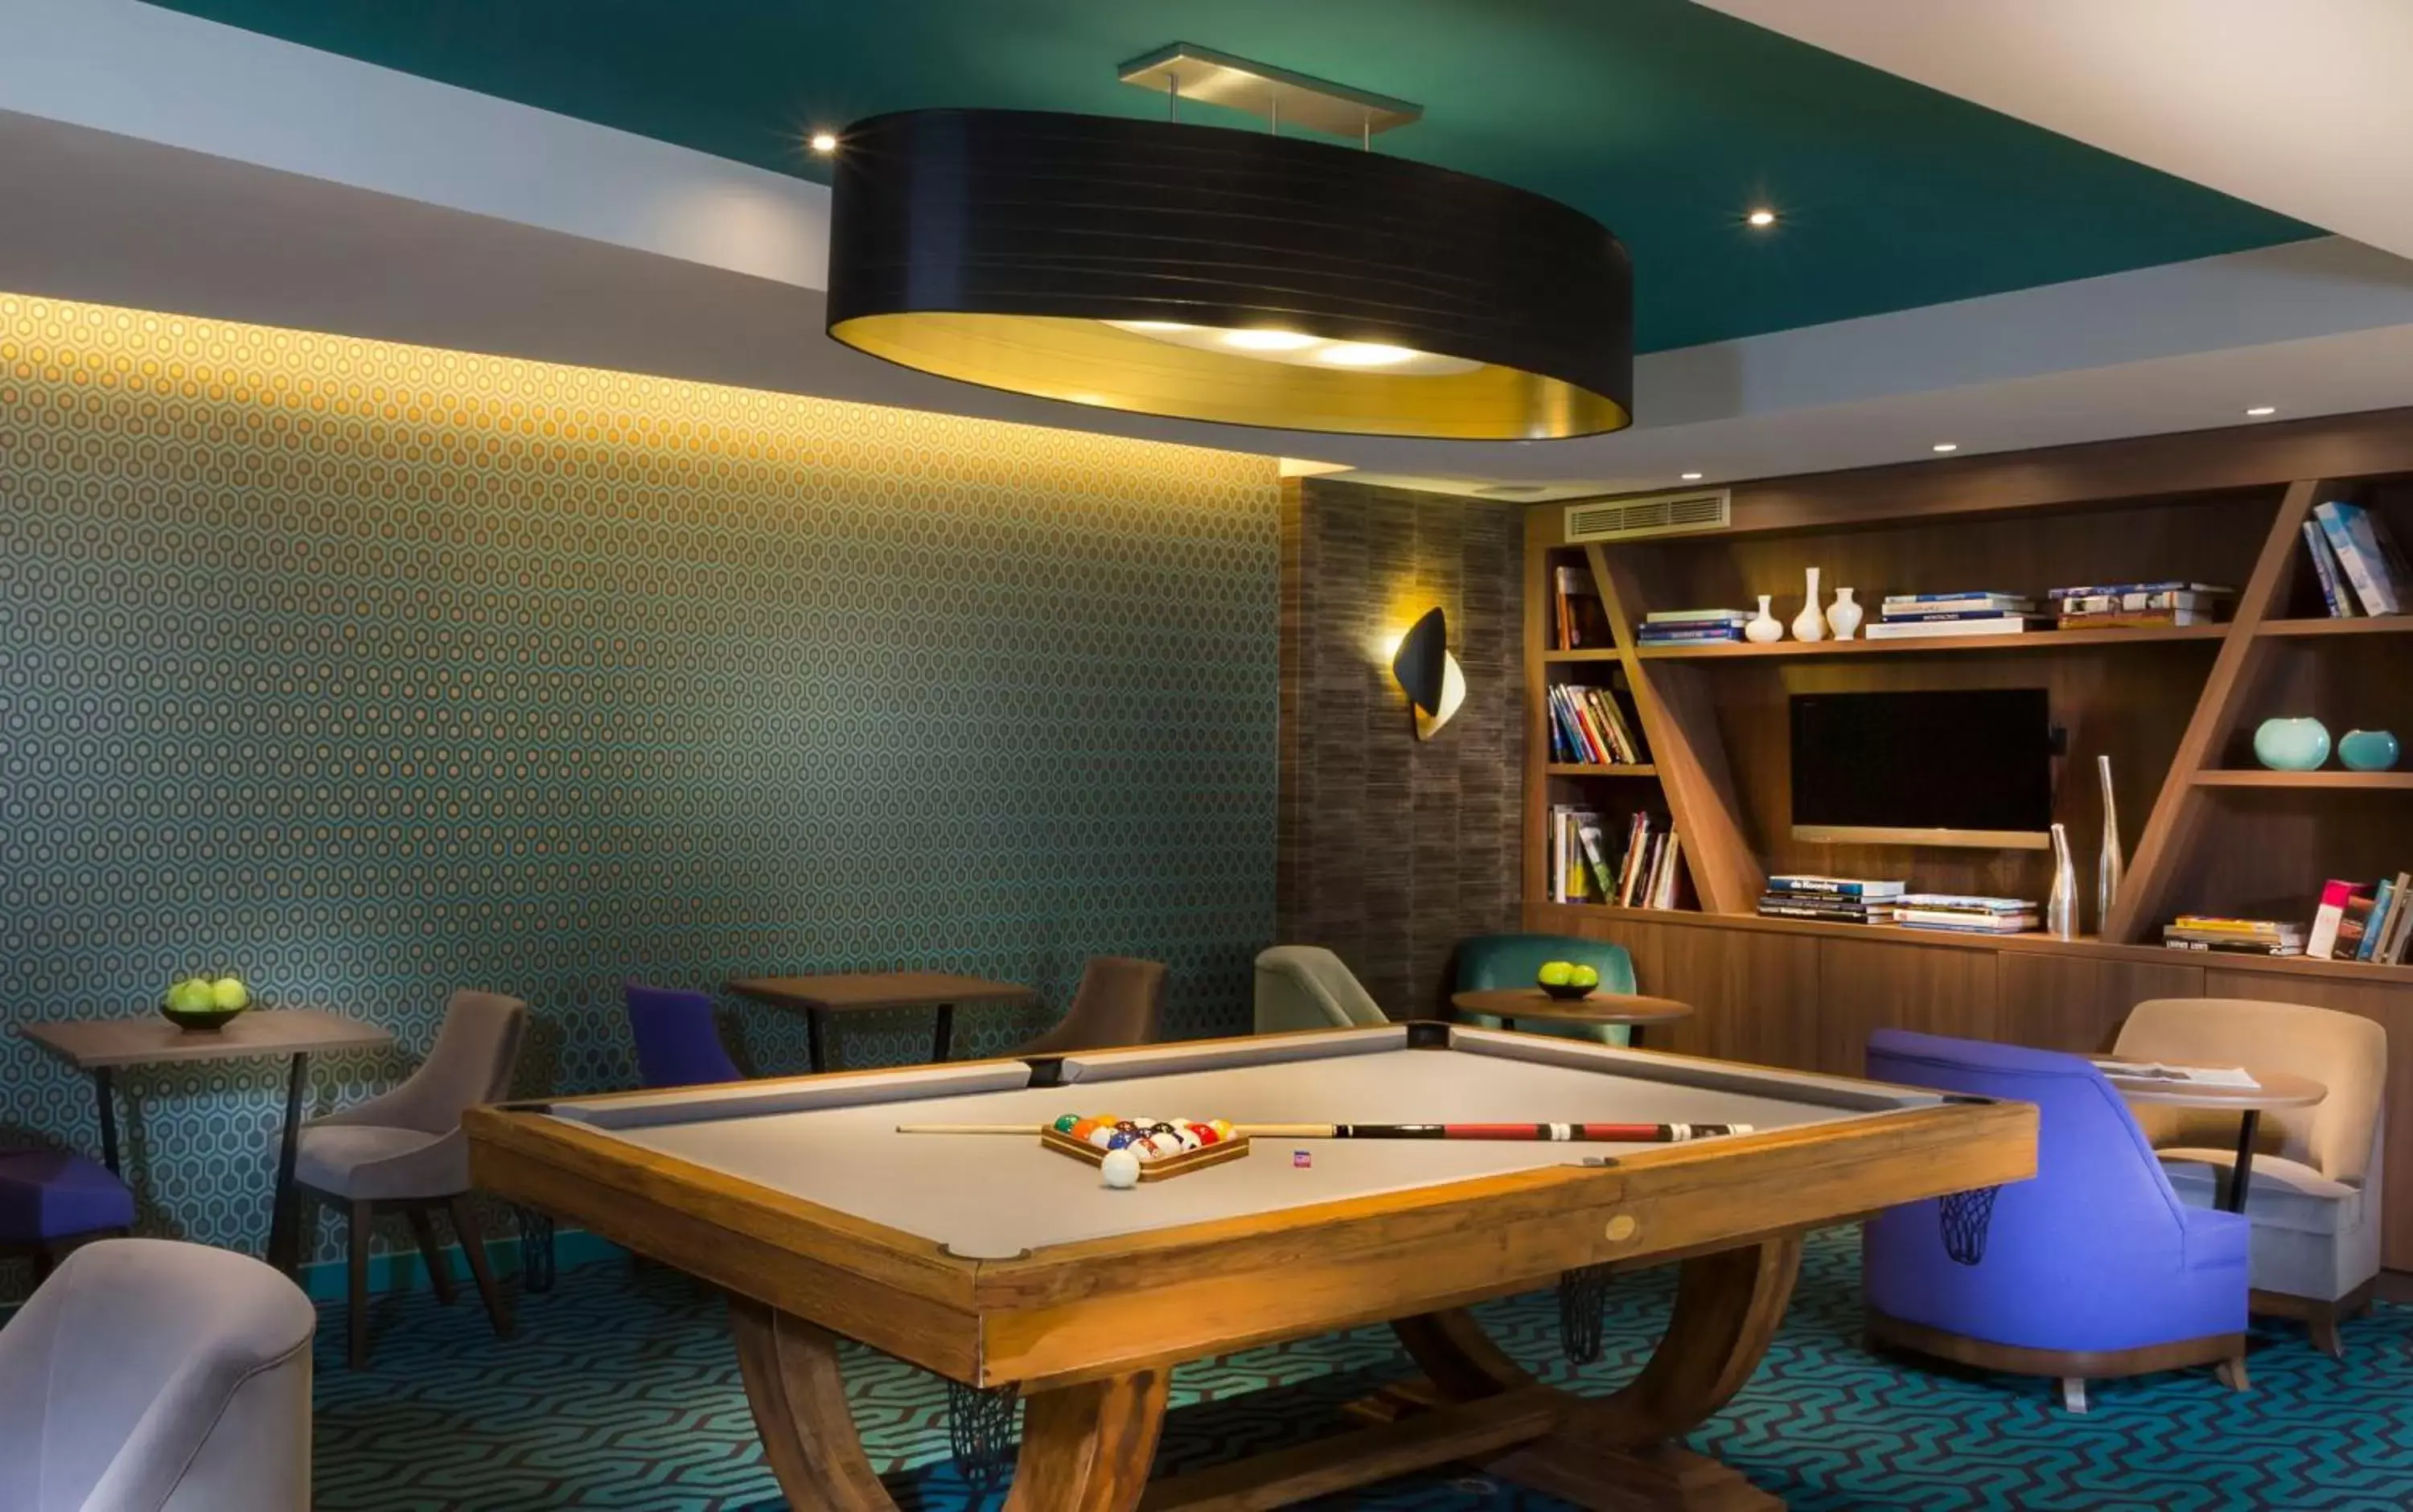 Game Room, Billiards in Hotel Acanthe - Boulogne Billancourt